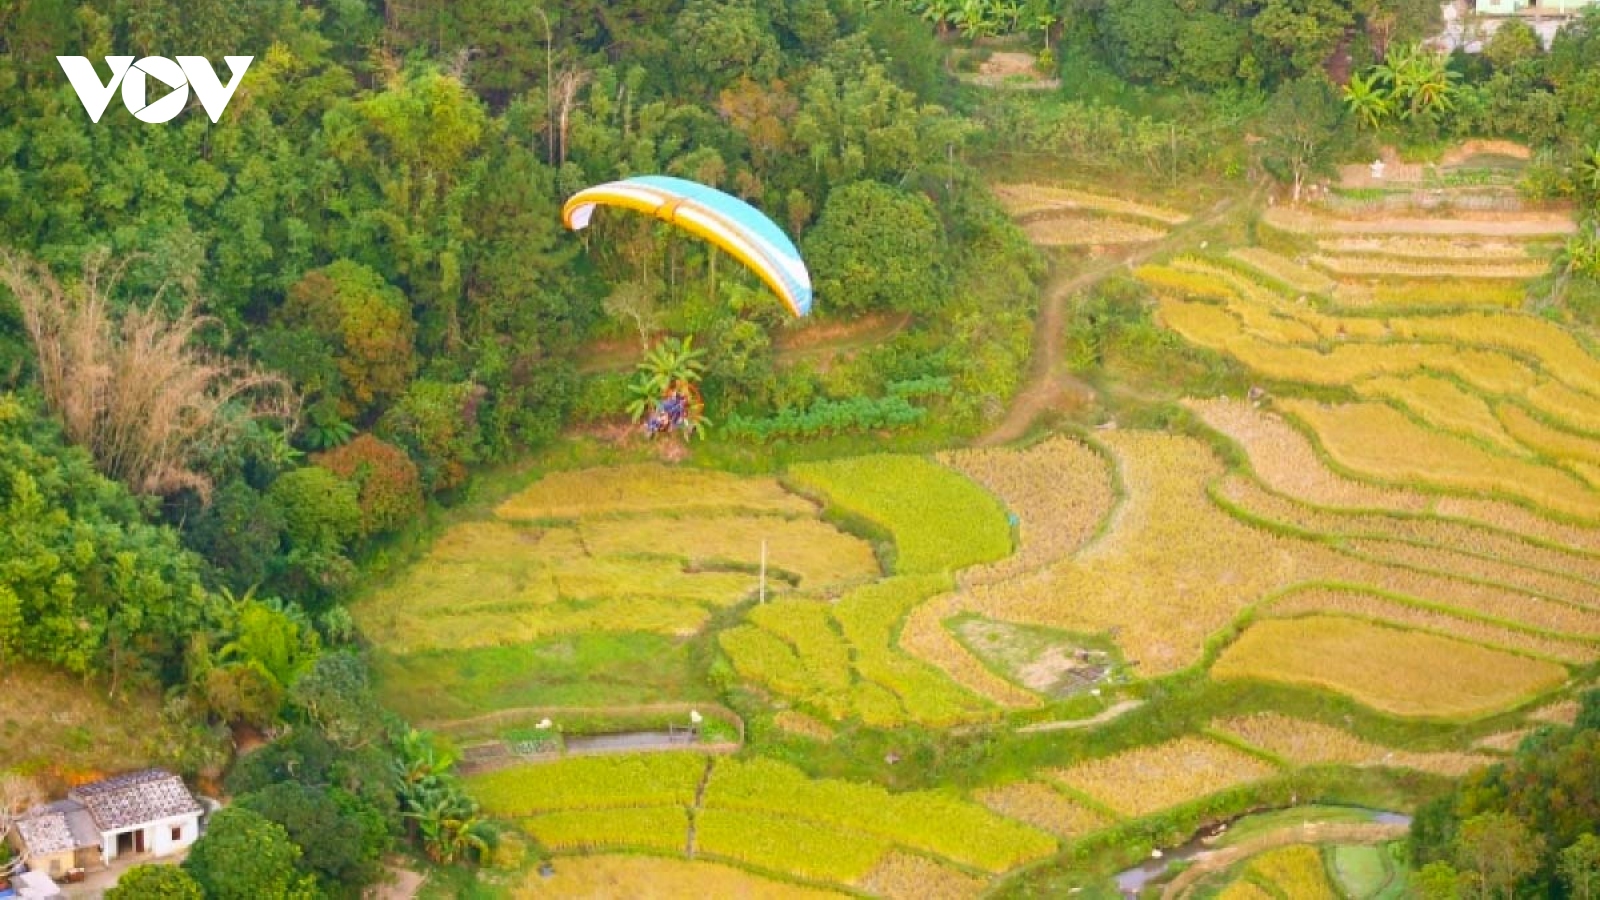 Paragliding over golden rice terrace fields in Northern Vietnam